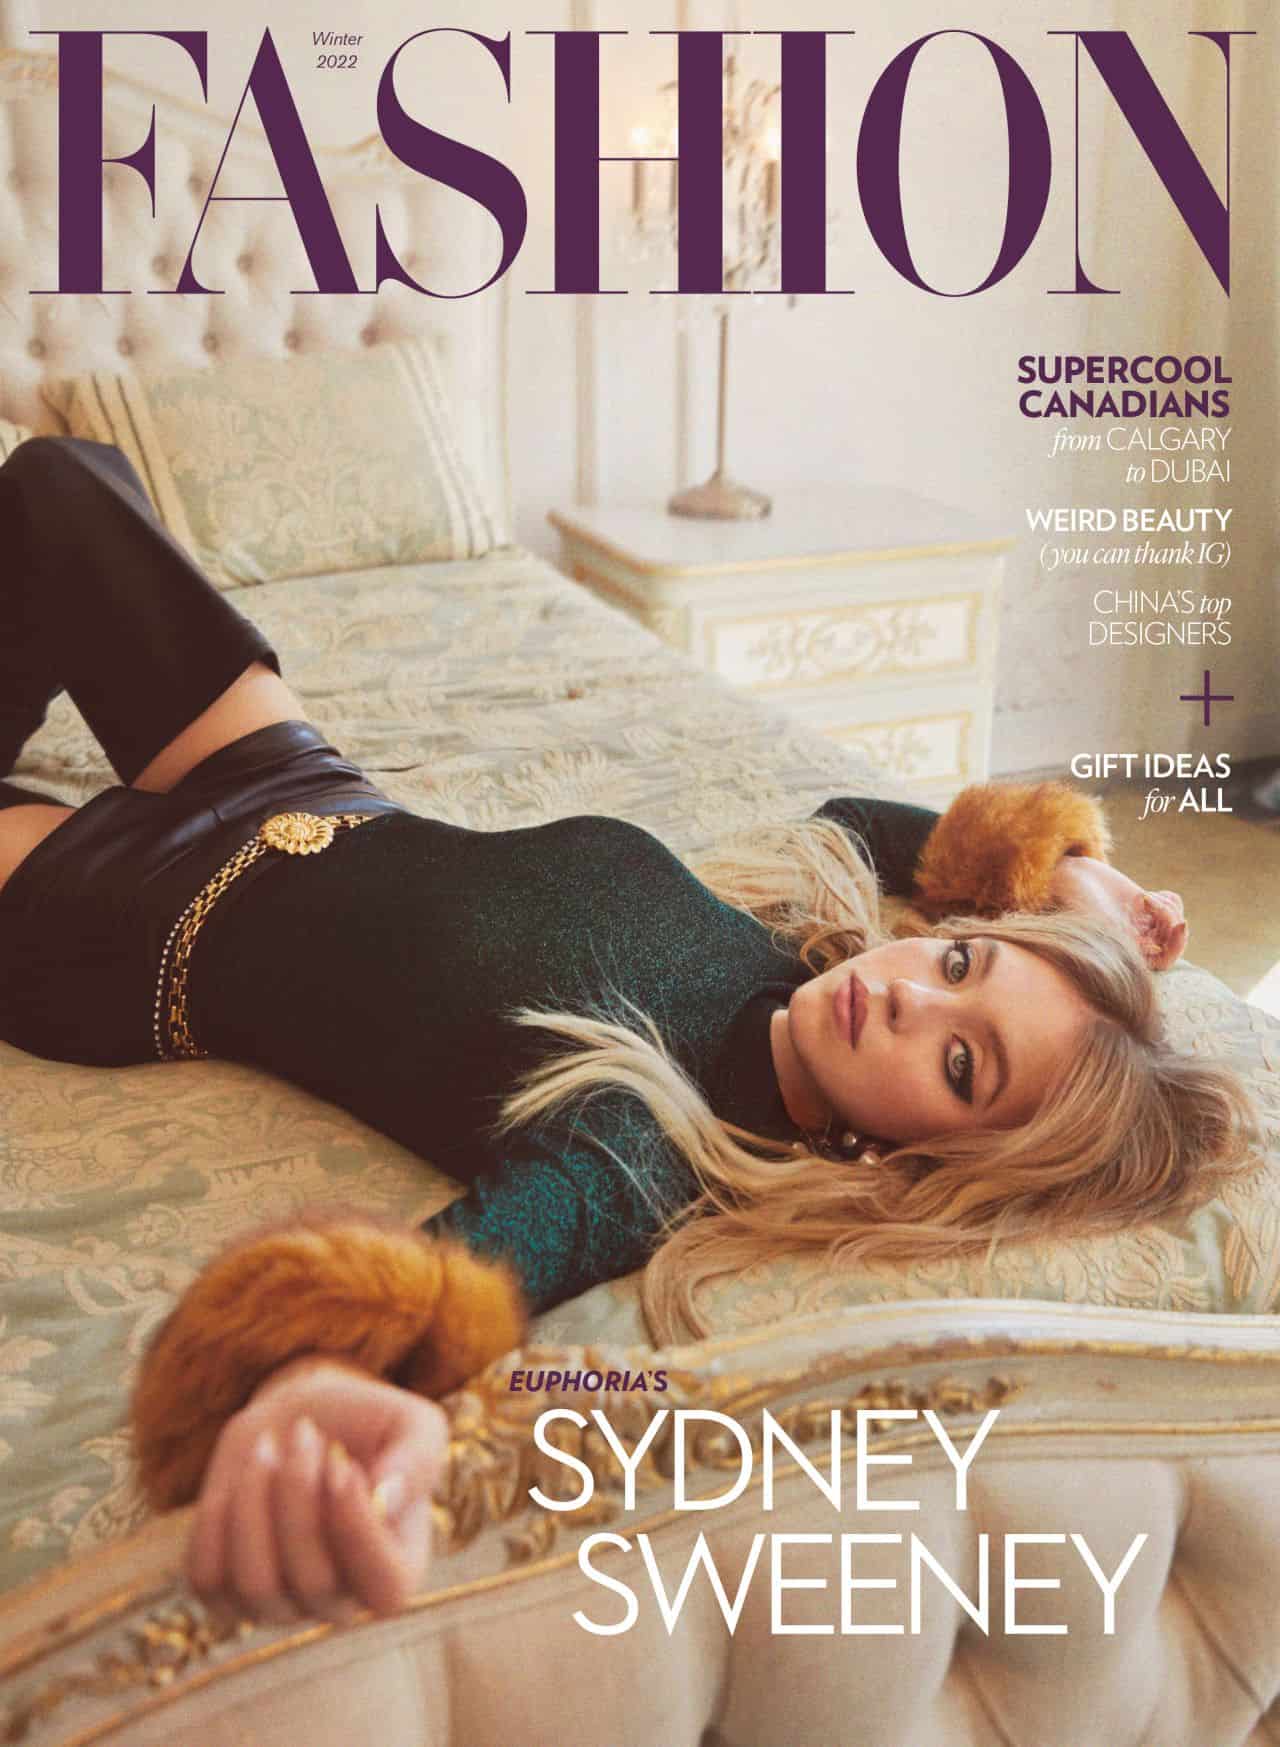 Sydney Sweeney is Fashion Magazine’s Winter 2022 Cover Star